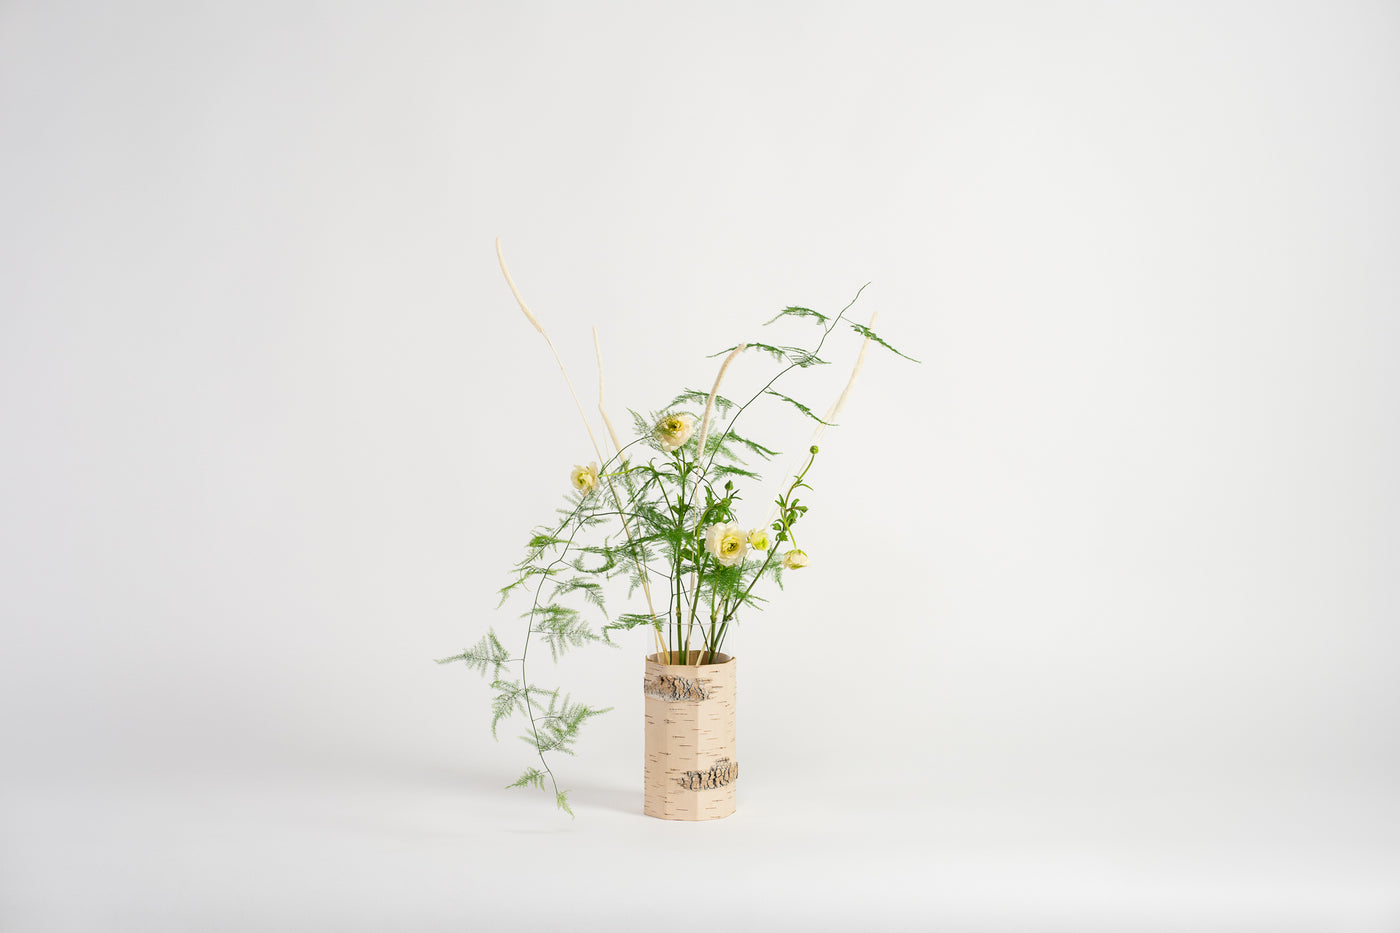 Tara Pikk Birch Bark Vases-Home Flora-BIRCH BARK, BOXES / ORGANISERS / CONTAINERS, TERRARIUMS / VASES / PLANT HANGERS-Forest Homes-Nature inspired decor-Nature decor